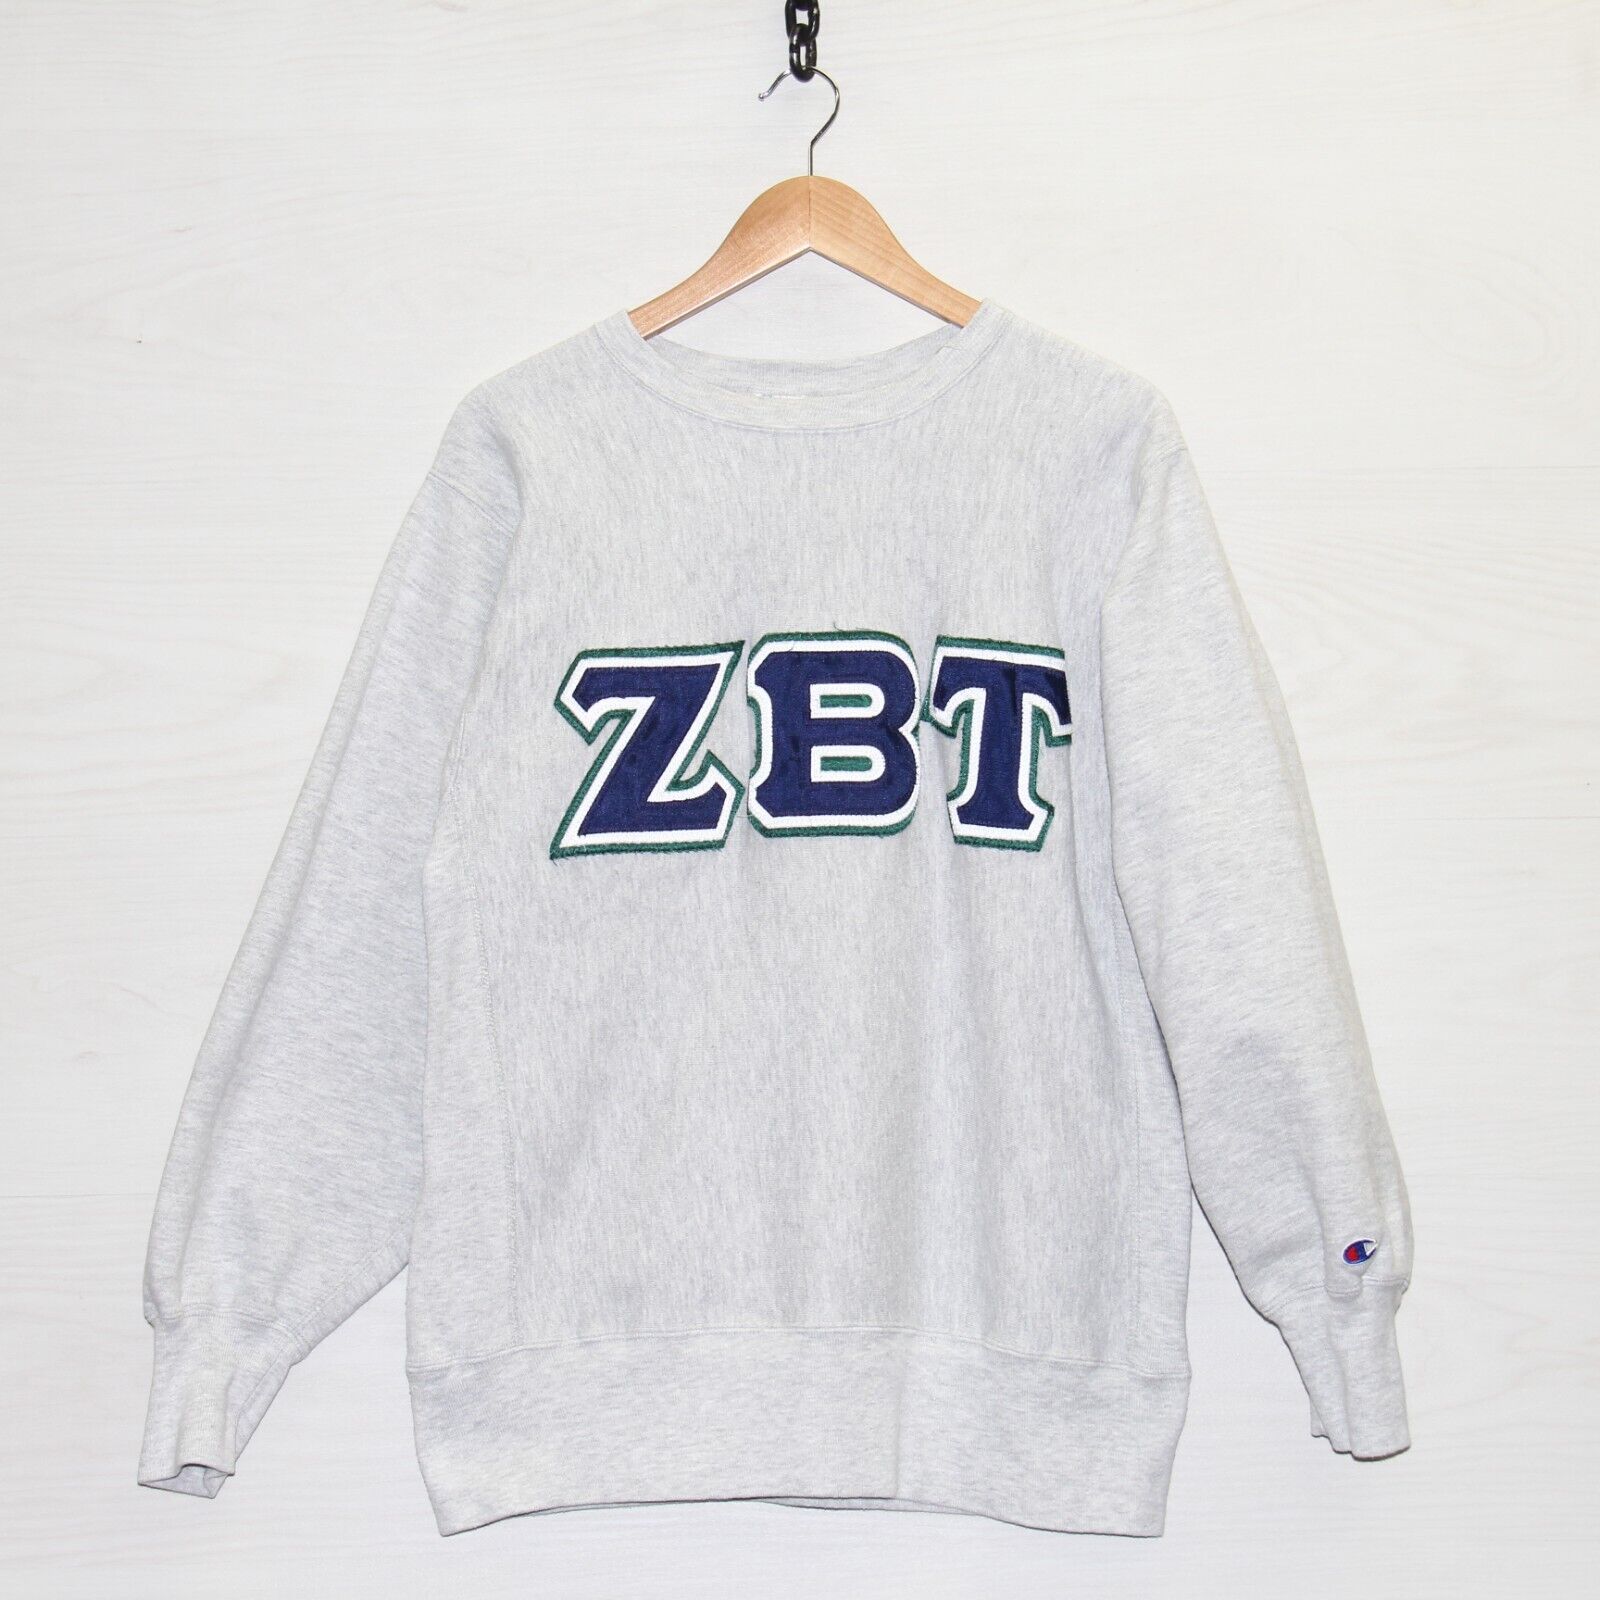 Vintage Zeta Beta Tau Champion Reverse Weave Sweatshirt Large 90s